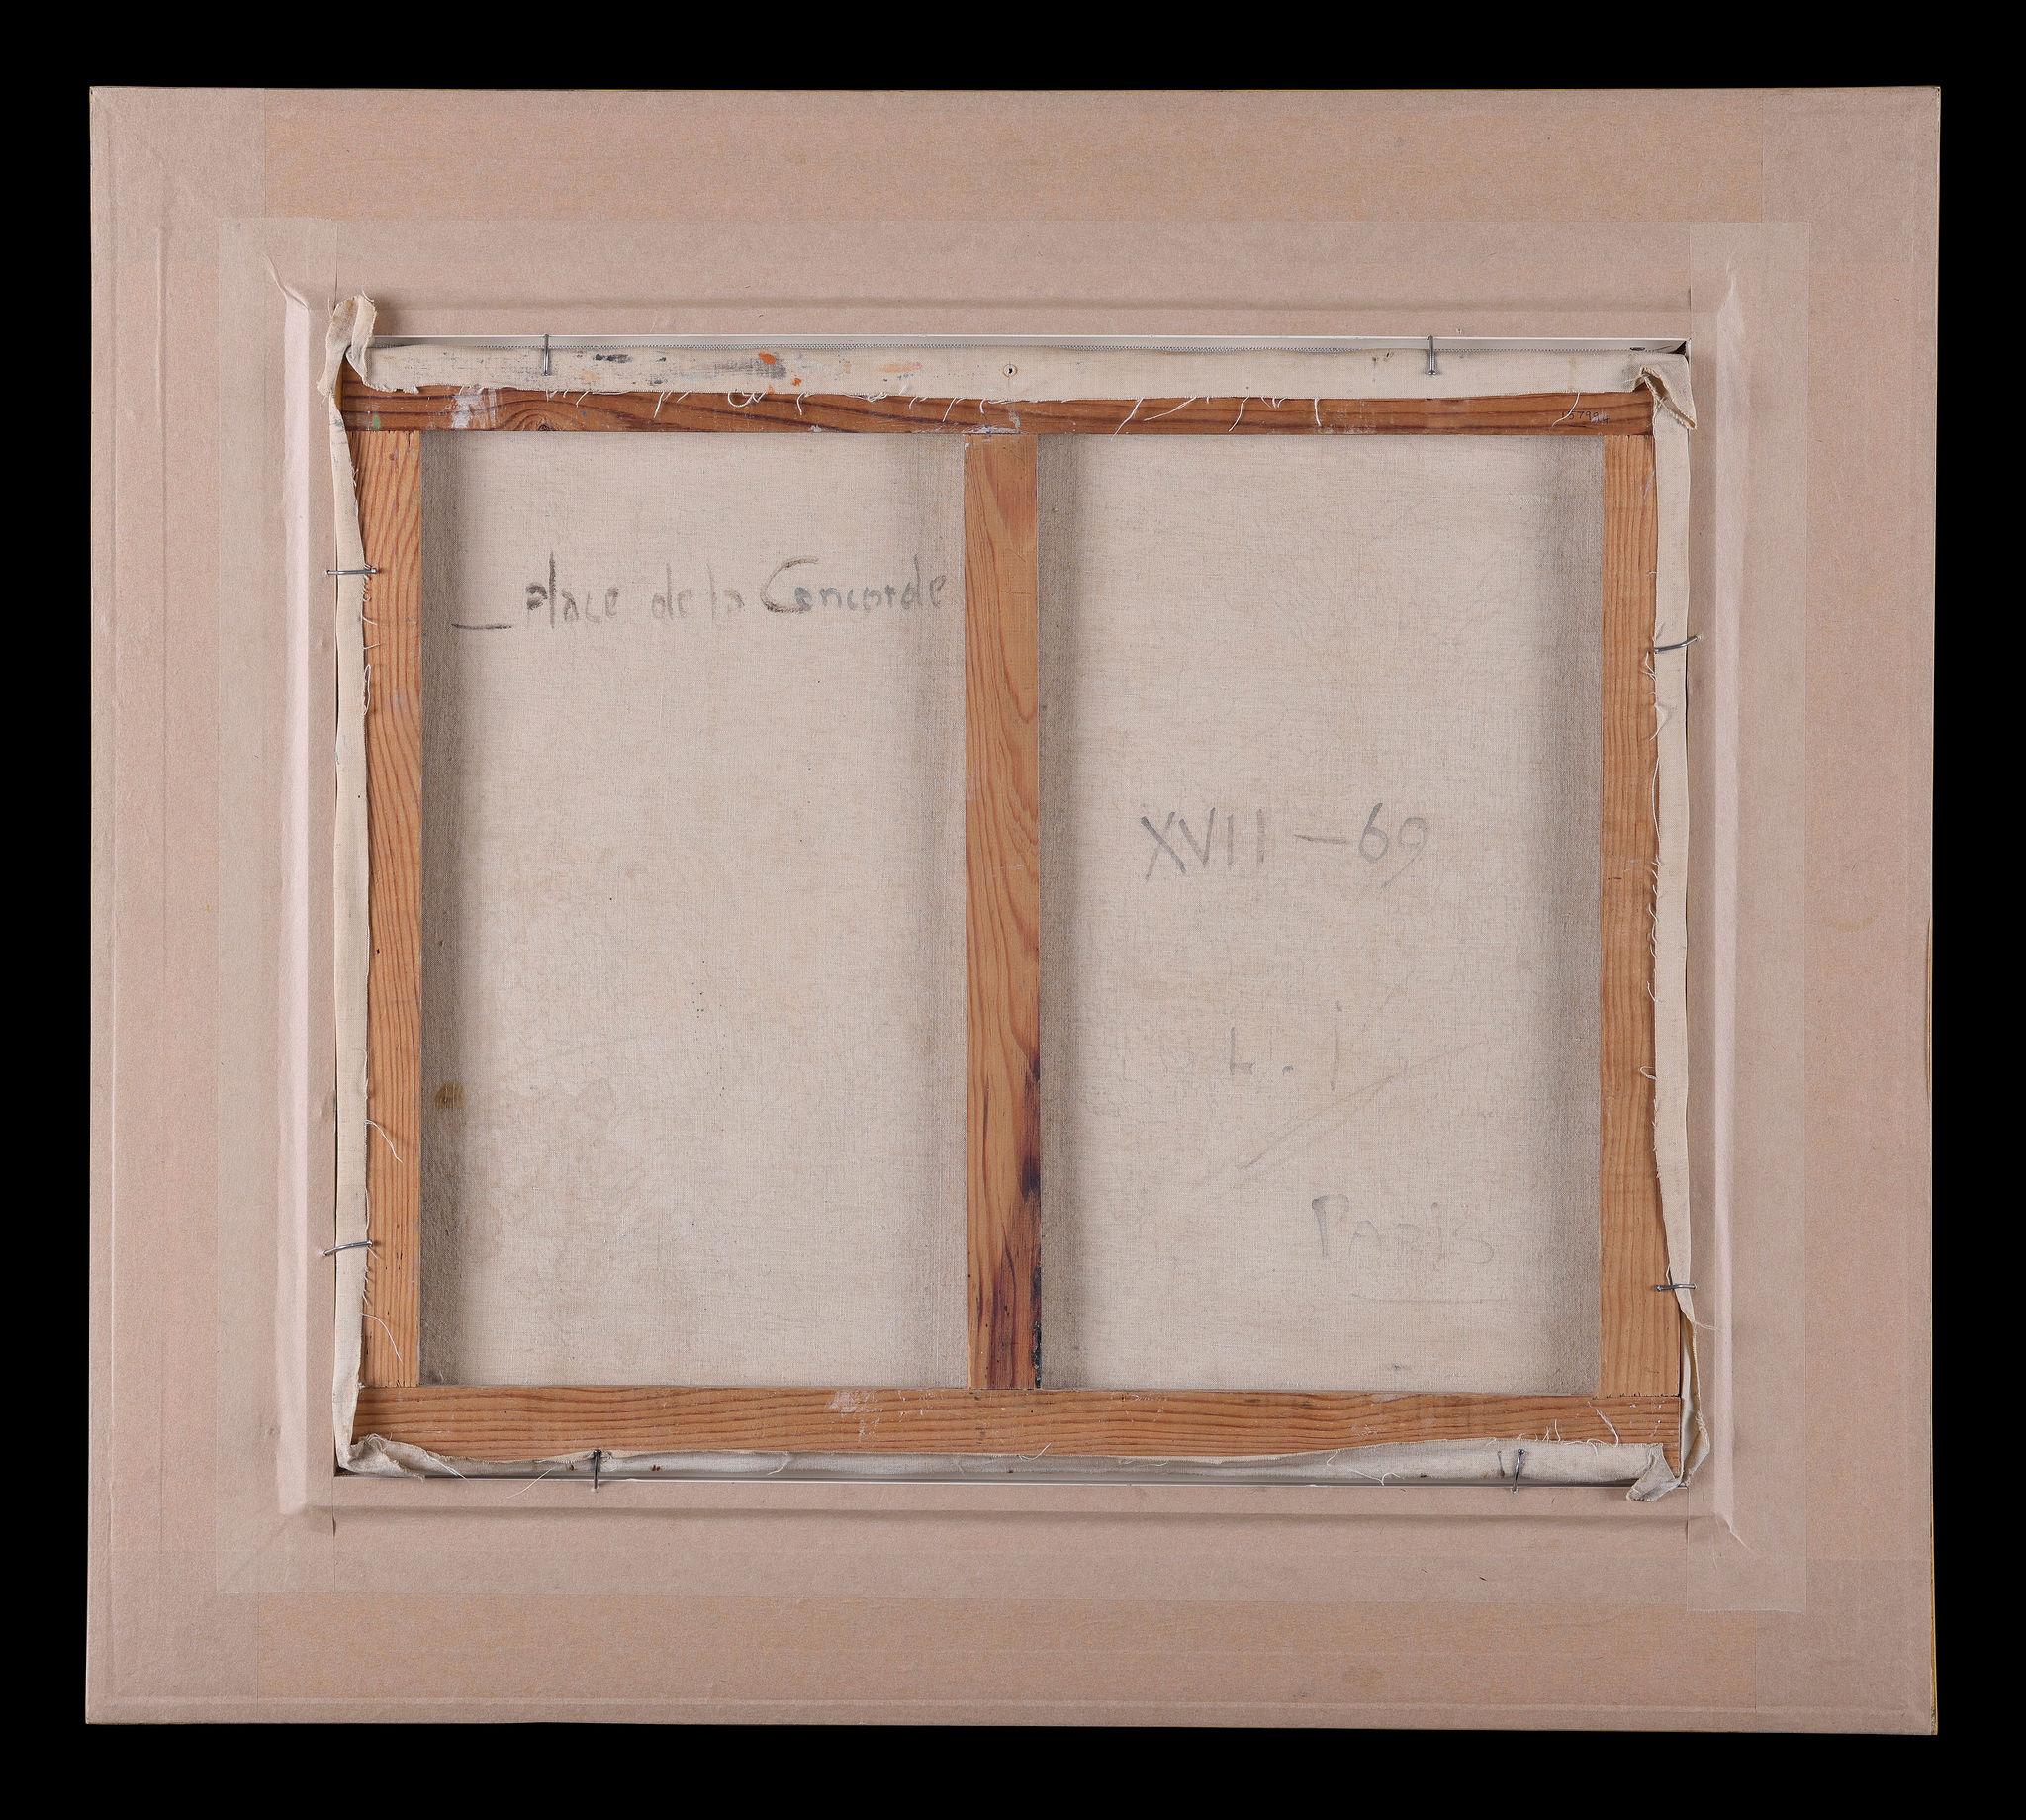 Louis Icart
(1880-1950)

Tamaño del lienzo: 46 x 55 cm (18 x 22